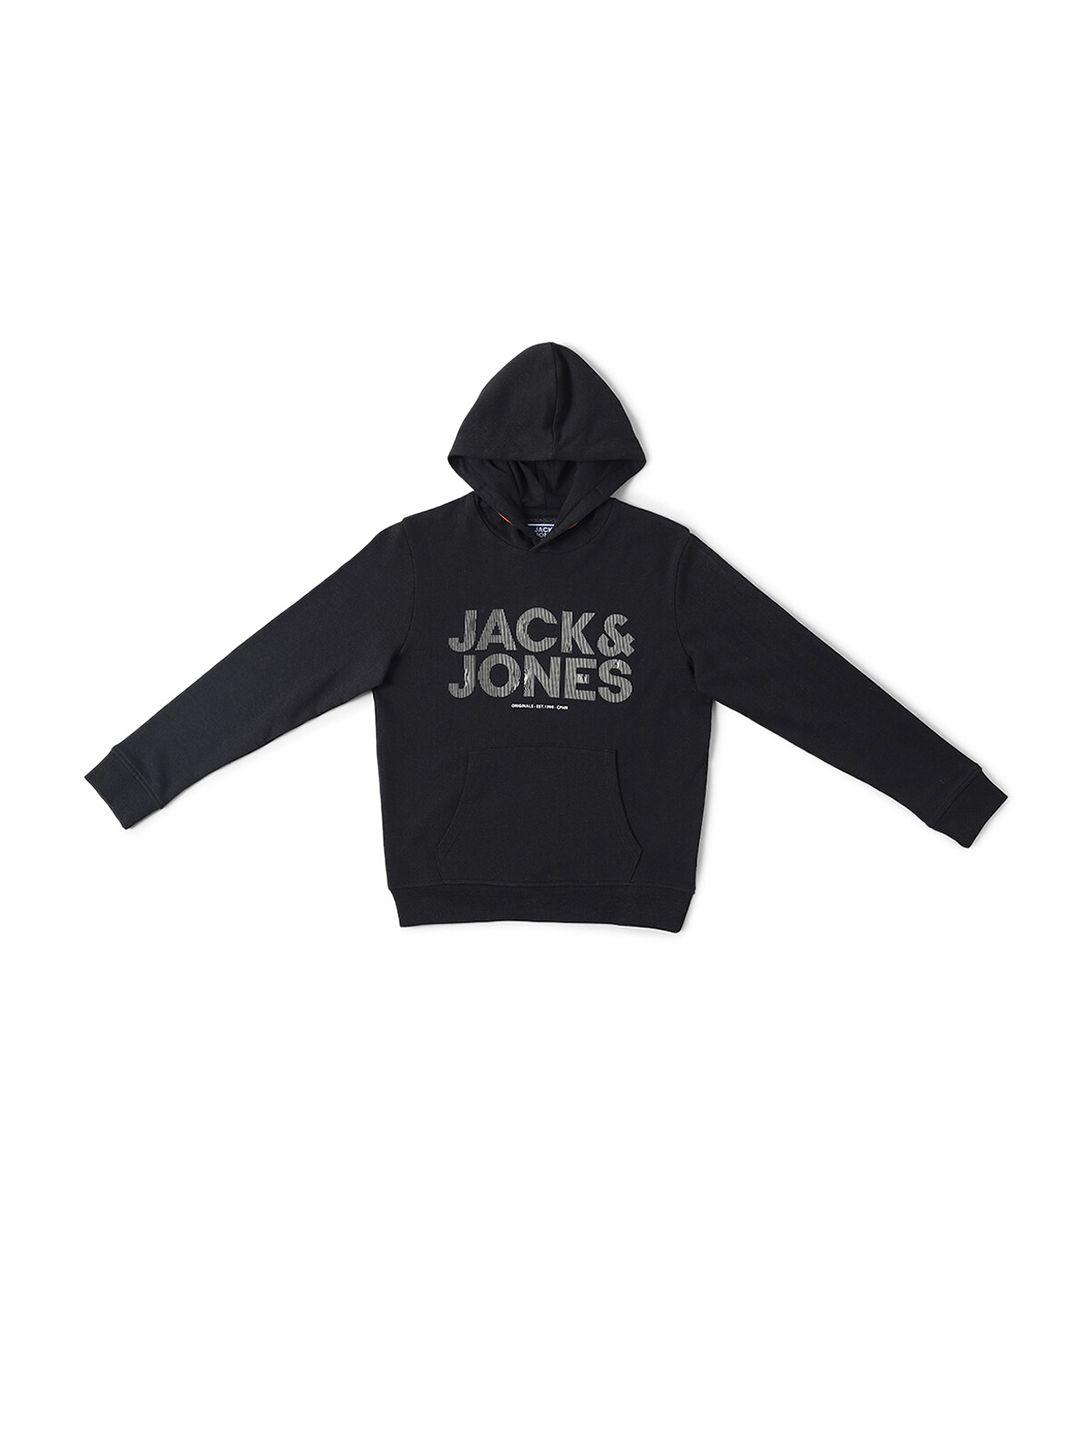 jack & jones boys black printed sweatshirt